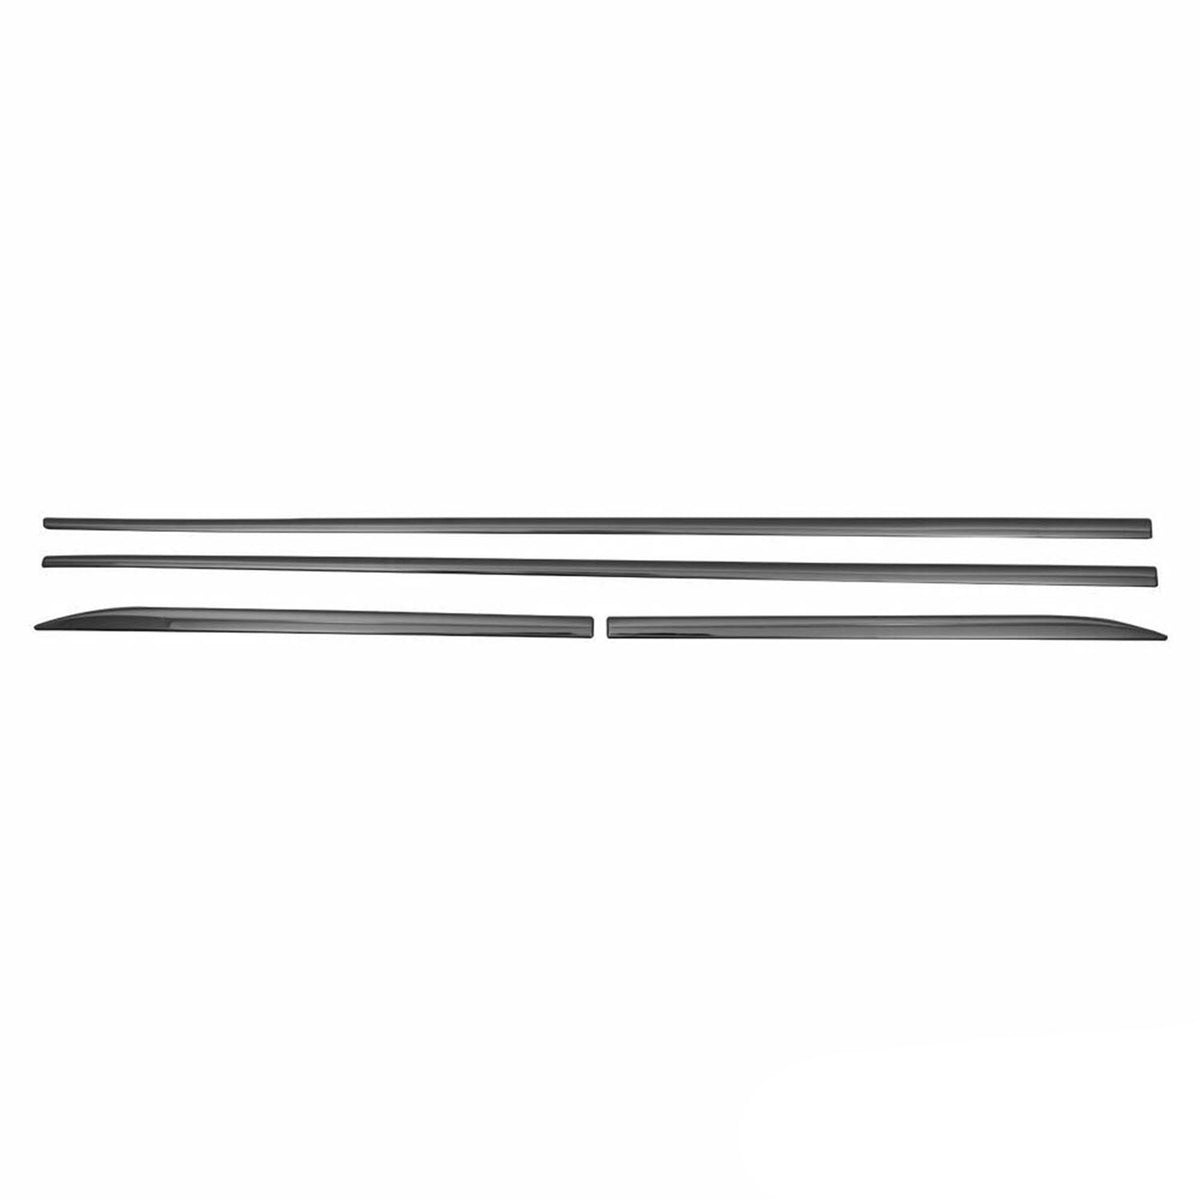 Seitentürleiste Türschutzleiste für Hyundai i30 2012-2017 Chrom Stahl Dunkel 4x